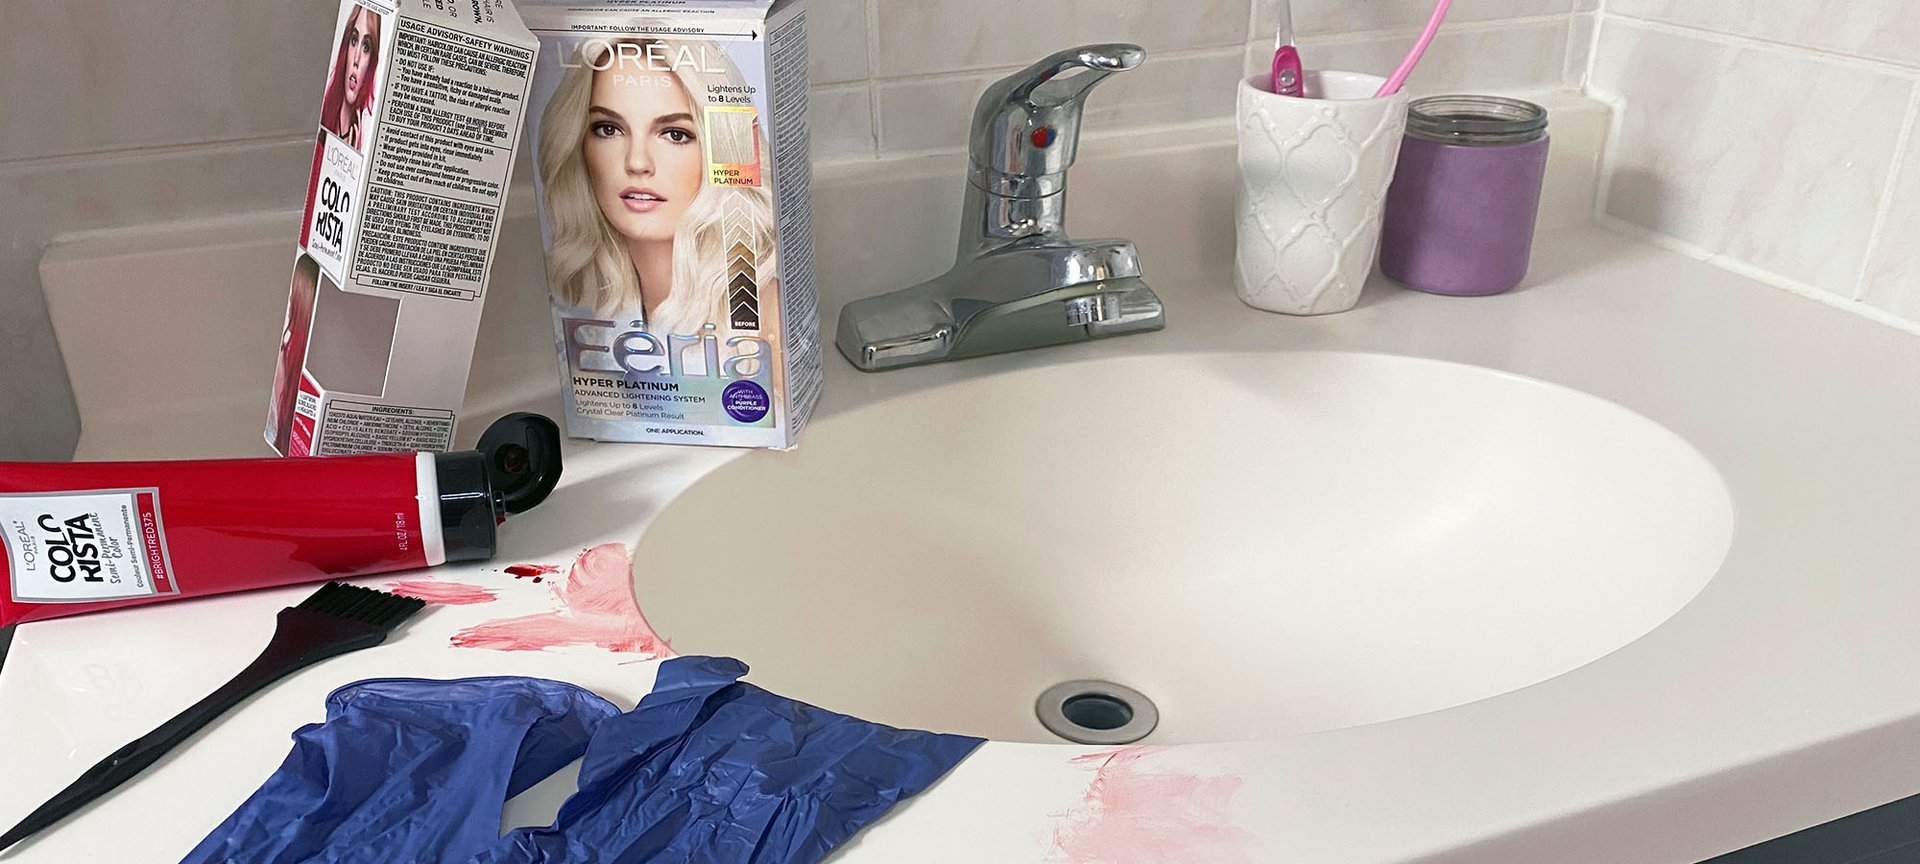 https://www.lorealparisusa.com/-/media/project/loreal/brand-sites/oap/americas/us/beauty-magazine/2021/november/11-30/hair-dye-stains-bathroom/removing-hair-dye-stains.jpg